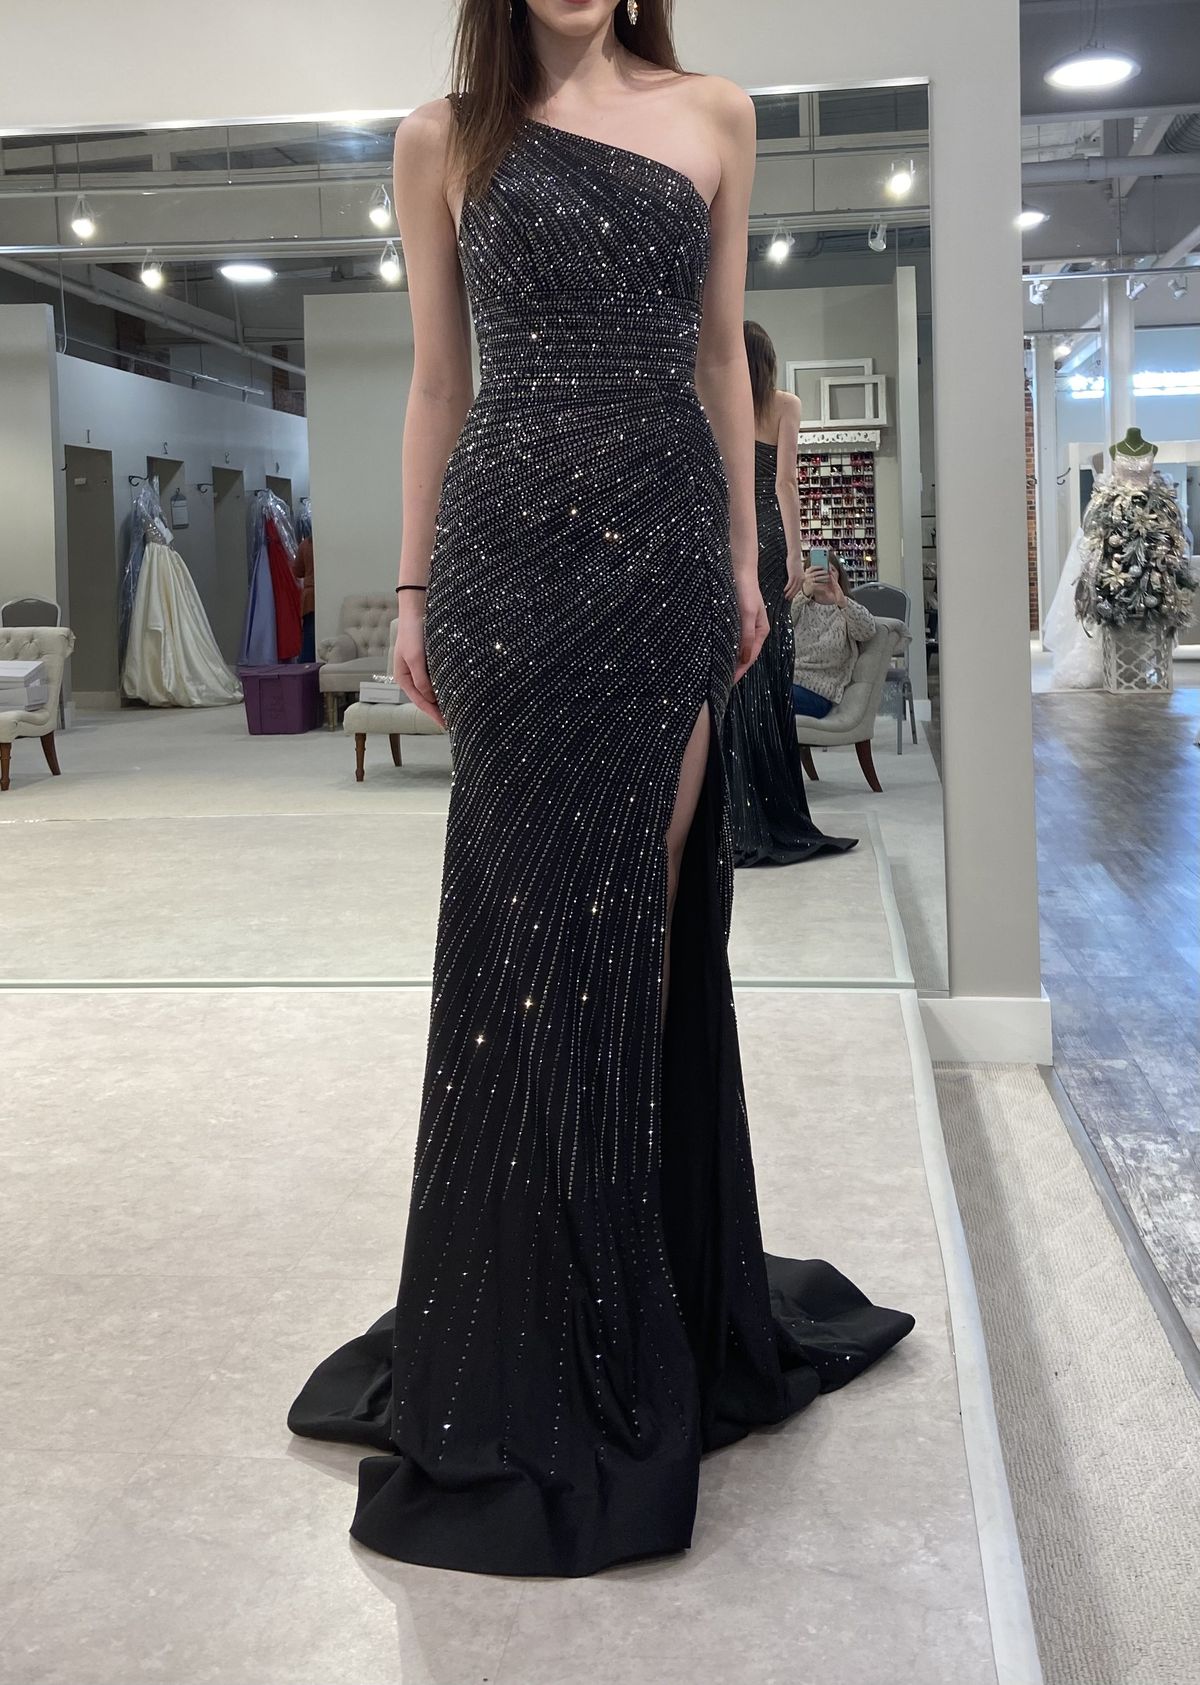 Sherri Hill Size 00 Prom One Shoulder Sequined Black Side Slit Dress on Queenly